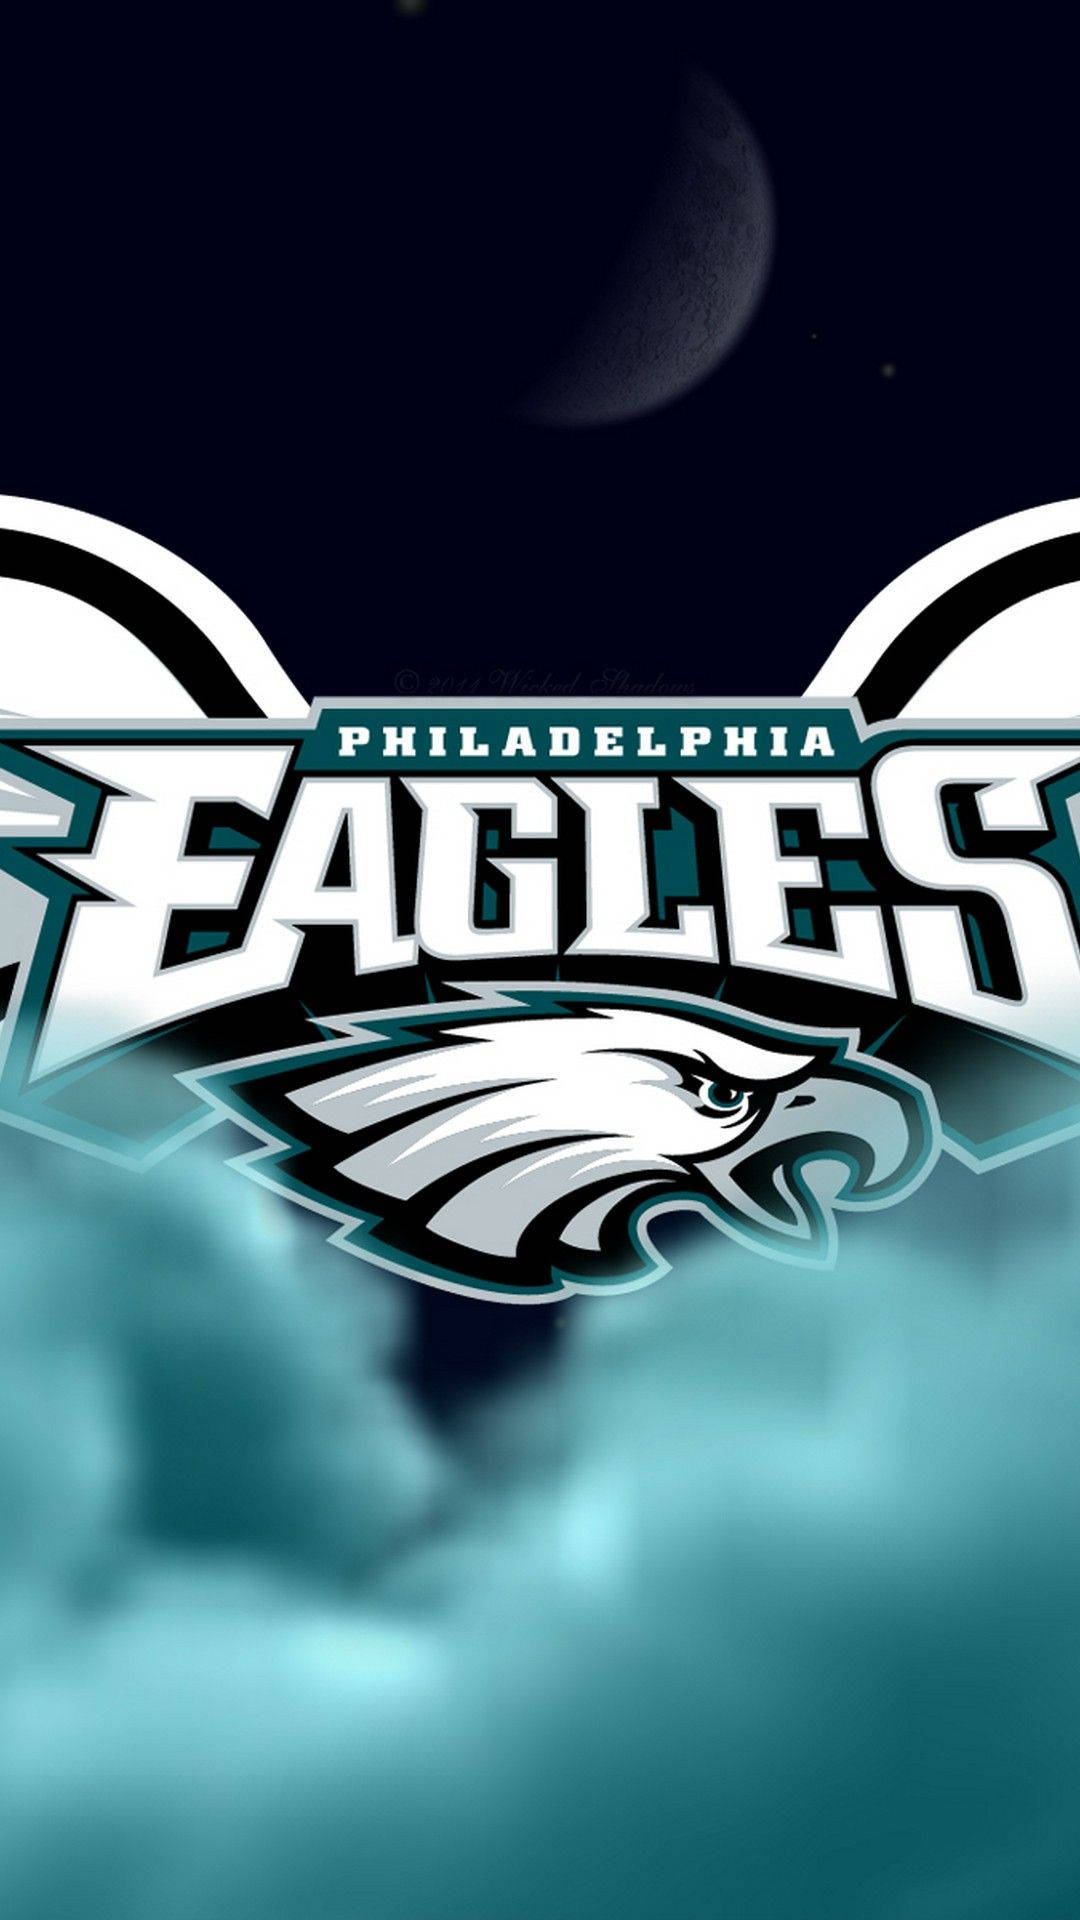 Philadelphia Eagles Logo At Night Background